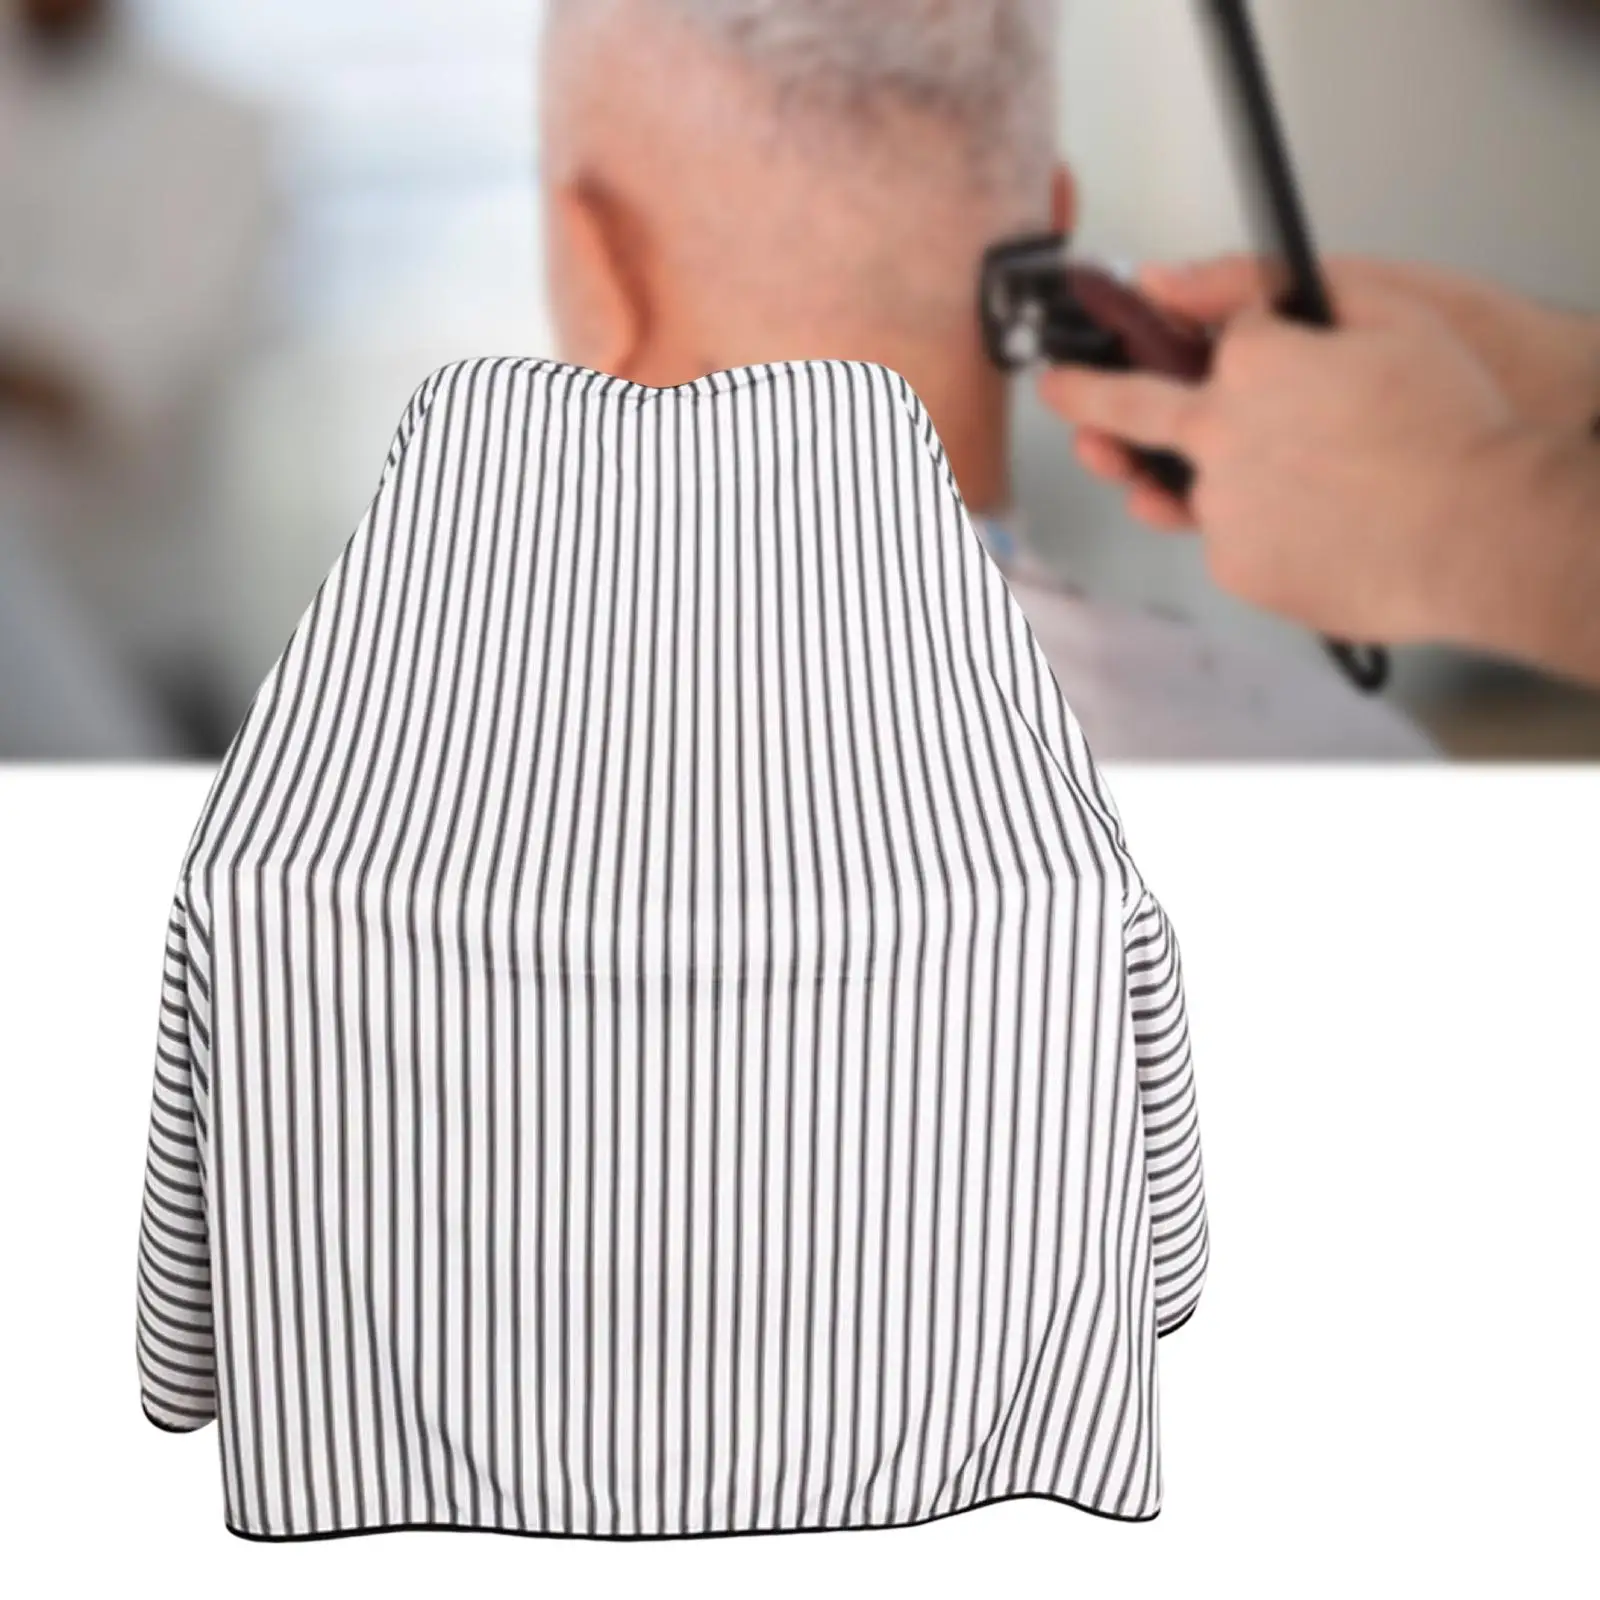 Salon Barber Cape Neck Guard Lightweight Cutting Hair Cape for Perm Home Haircut